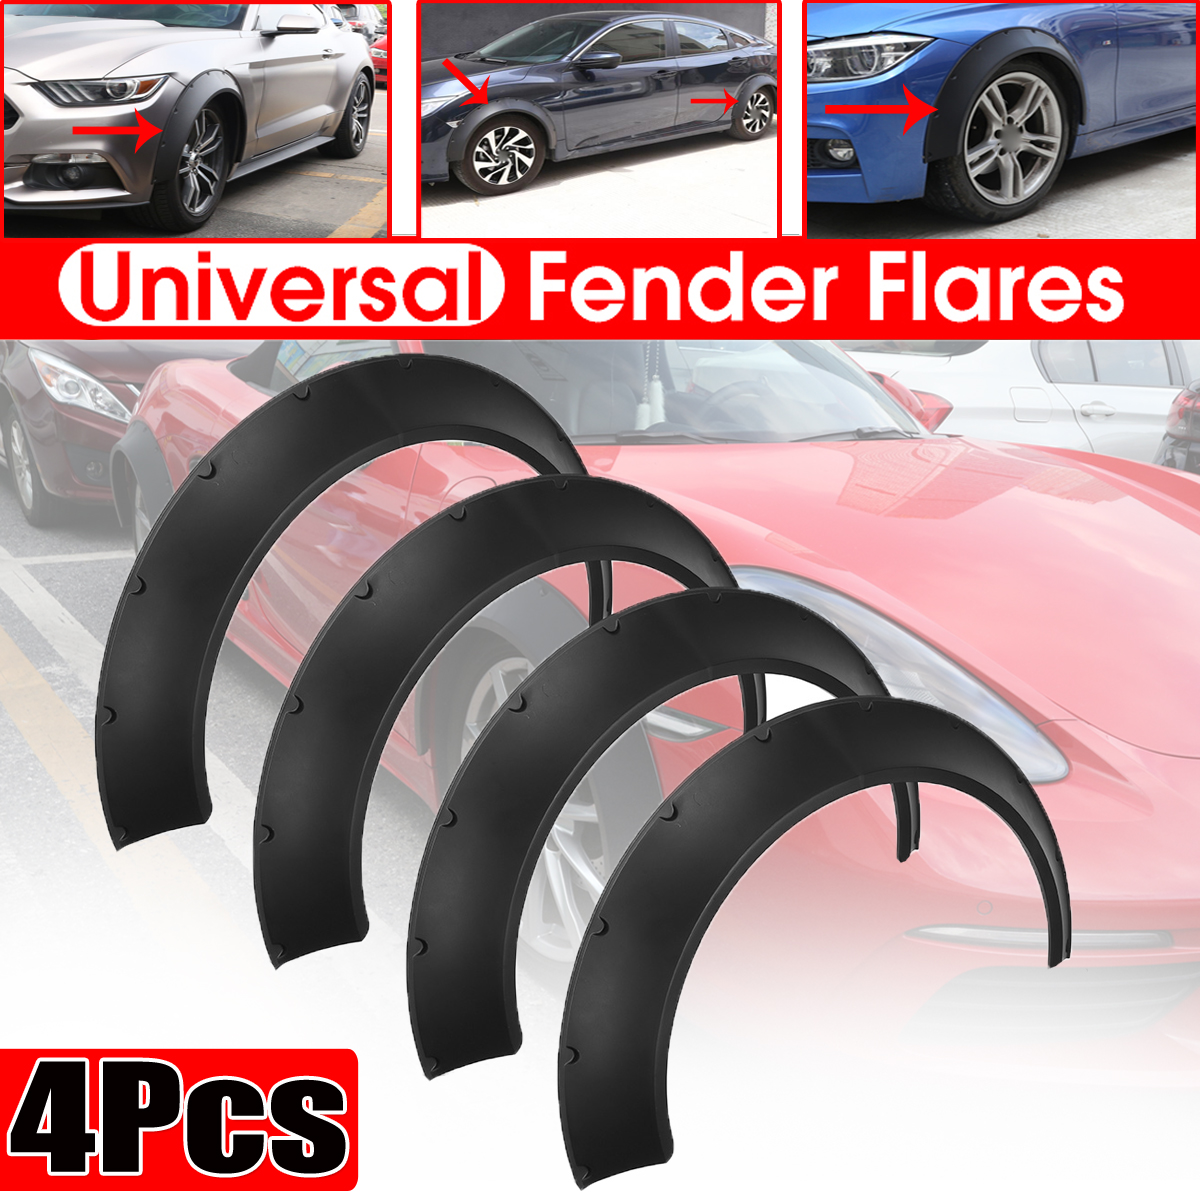 Tires Fender Flares Flexible Durable Polyurethane Body Set Fit For Universal Car 